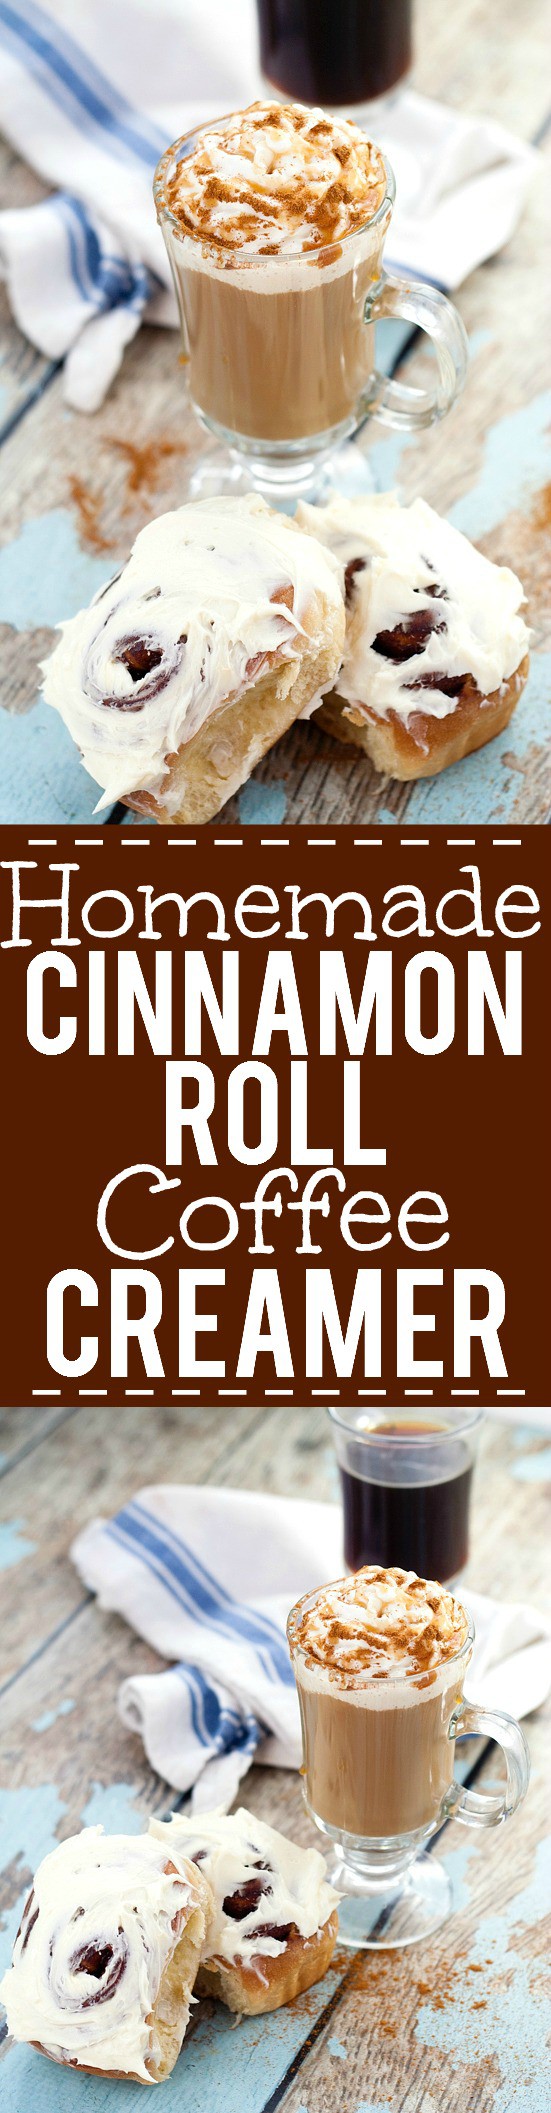 Homemade Cinnamon Roll Coffee Creamer recipe - Have your coffee as a decadent breakfast with this Cinnabon inspired Homemade Cinnamon Roll Creamer recipe with cinnamon, vanilla, and brown sugar. YES! I LOVE Cinnabon!